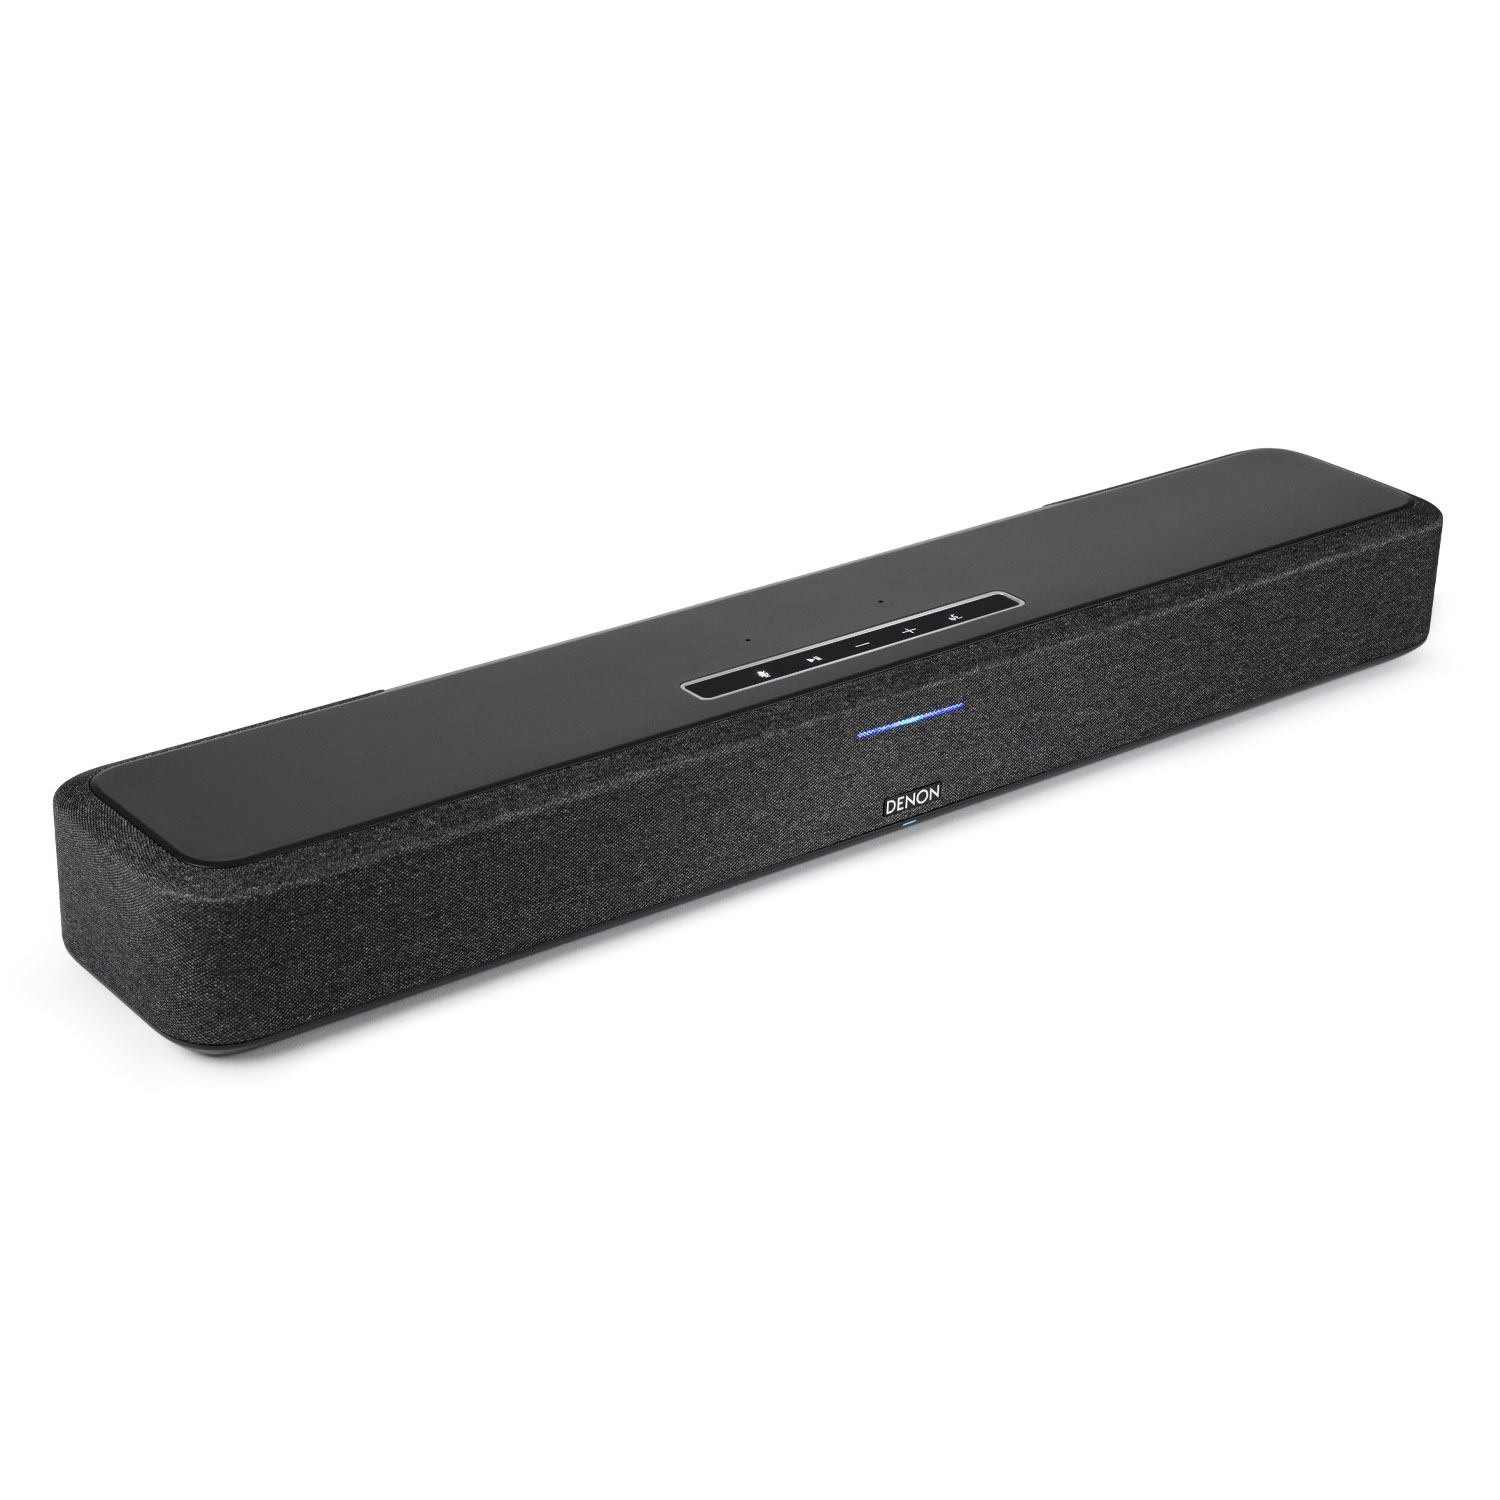 Denon Home Sound Bar 550 Soundbar høyttaler - TV & Surround - Lydplanke / TV-lyd